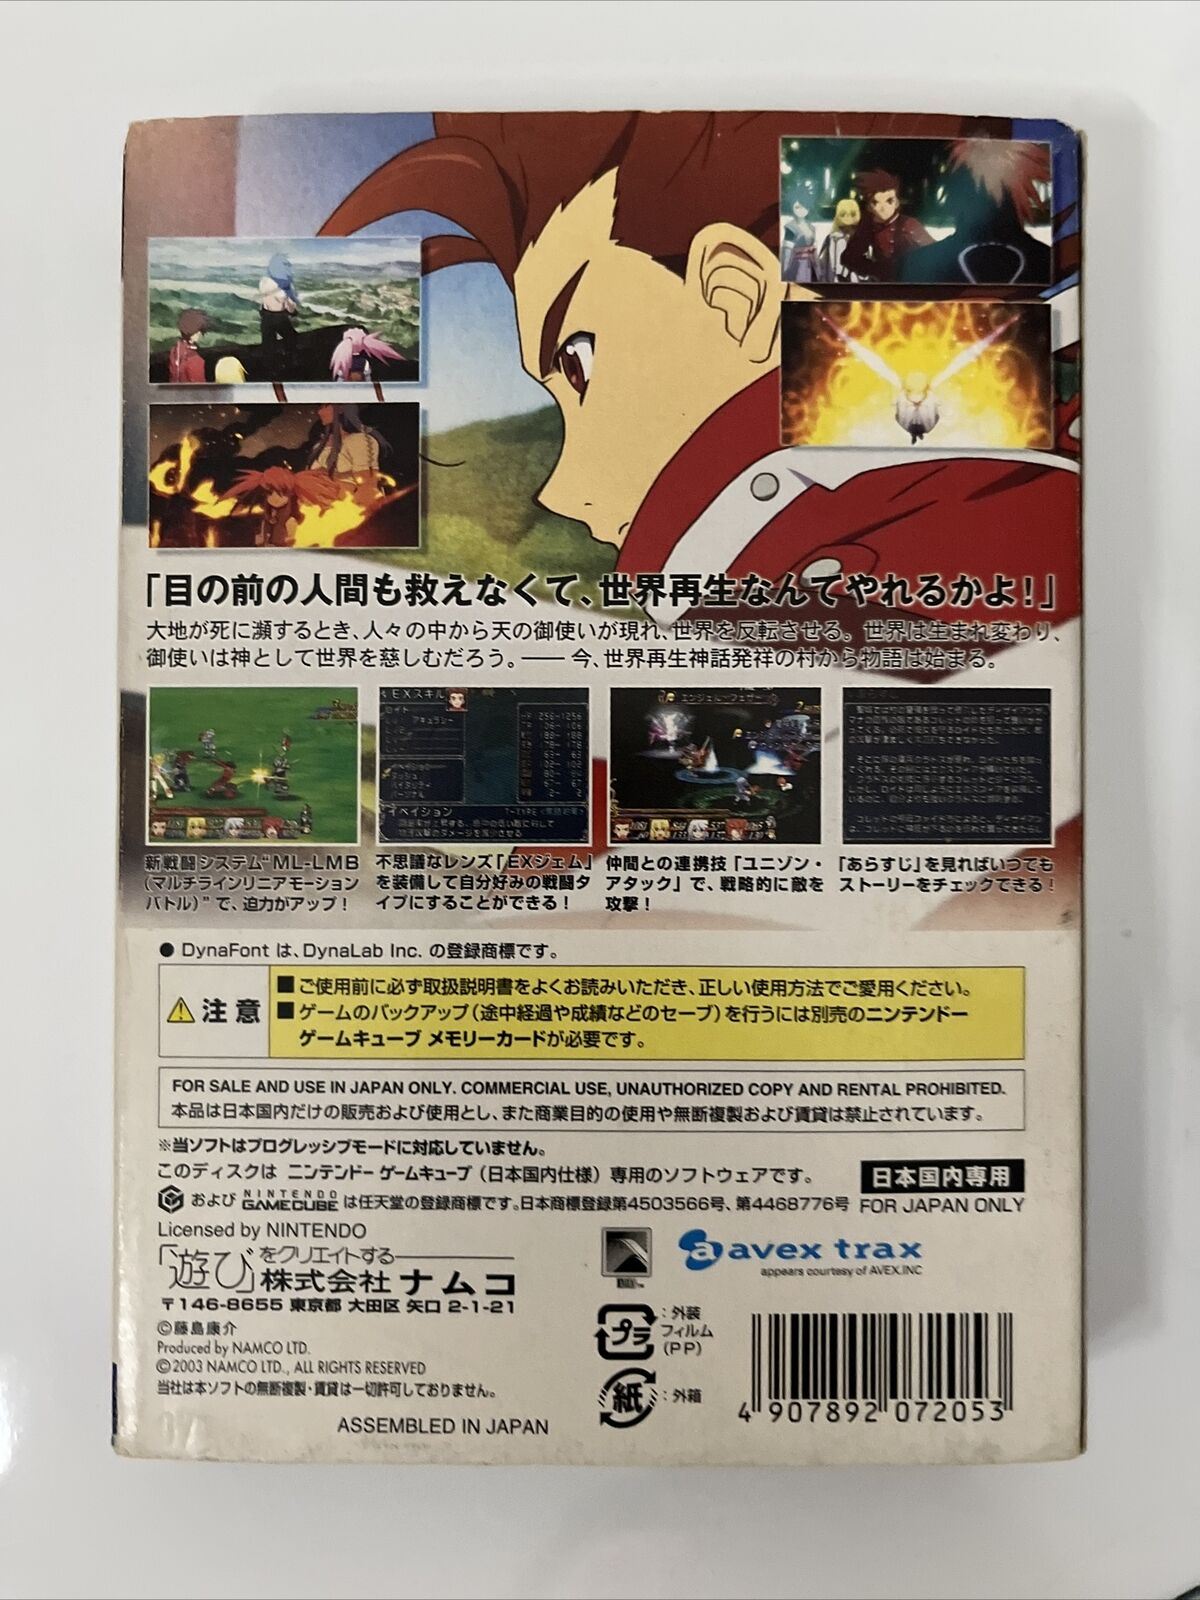 Tales of Symphonia - Nintendo GameCube GC NTSC-J JAPAN 2003  Game Complete